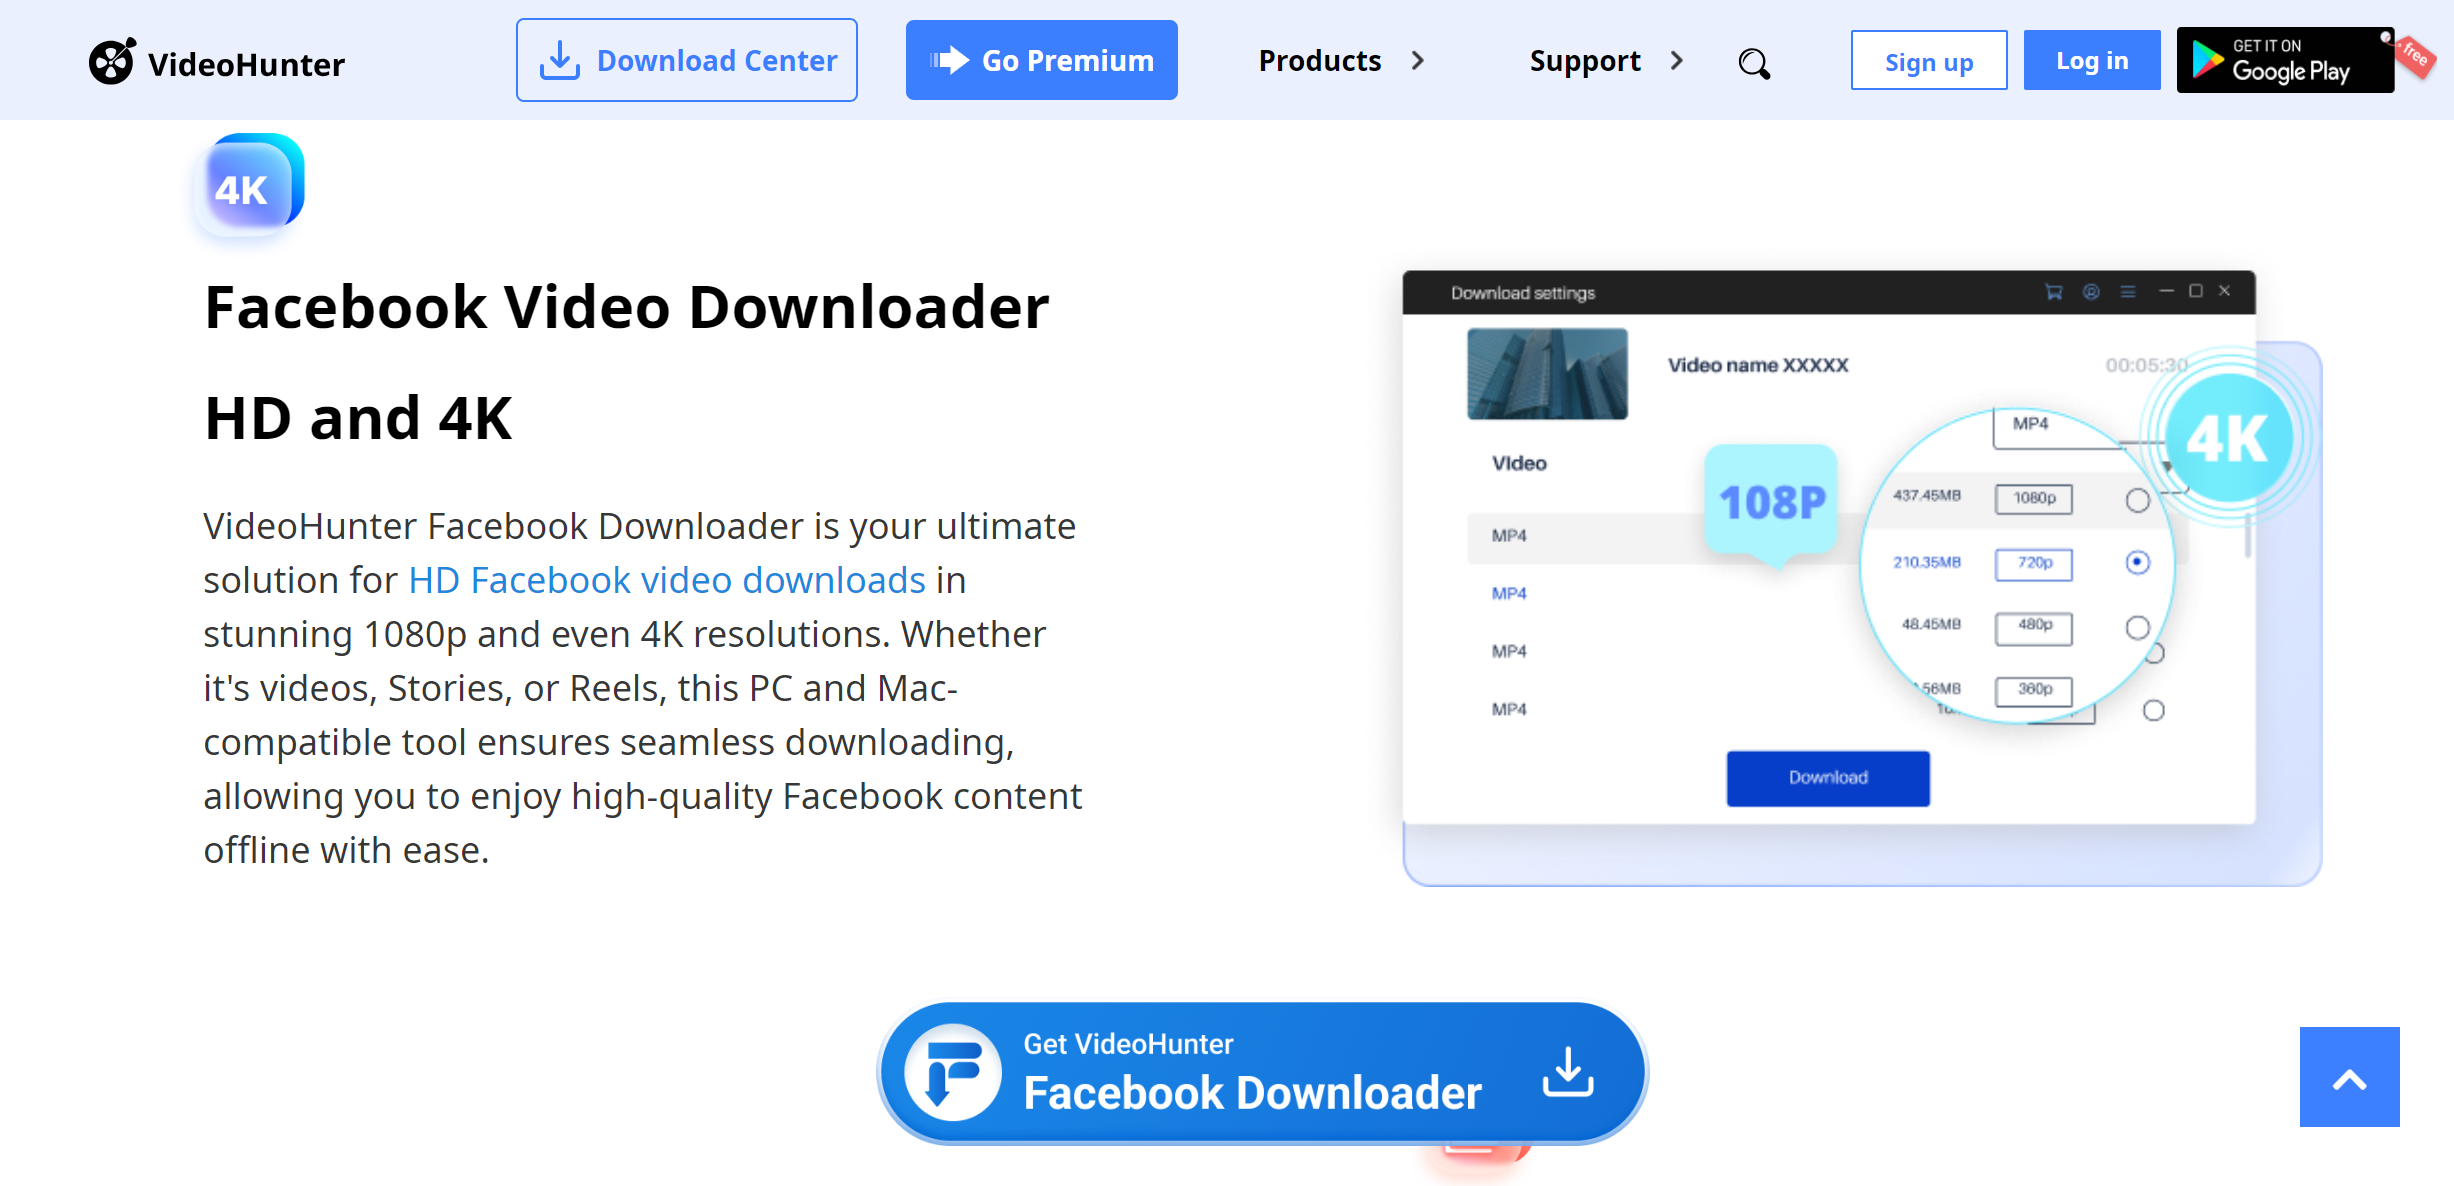 VideoHunter Facebook Downloader - Windows PC and Mac